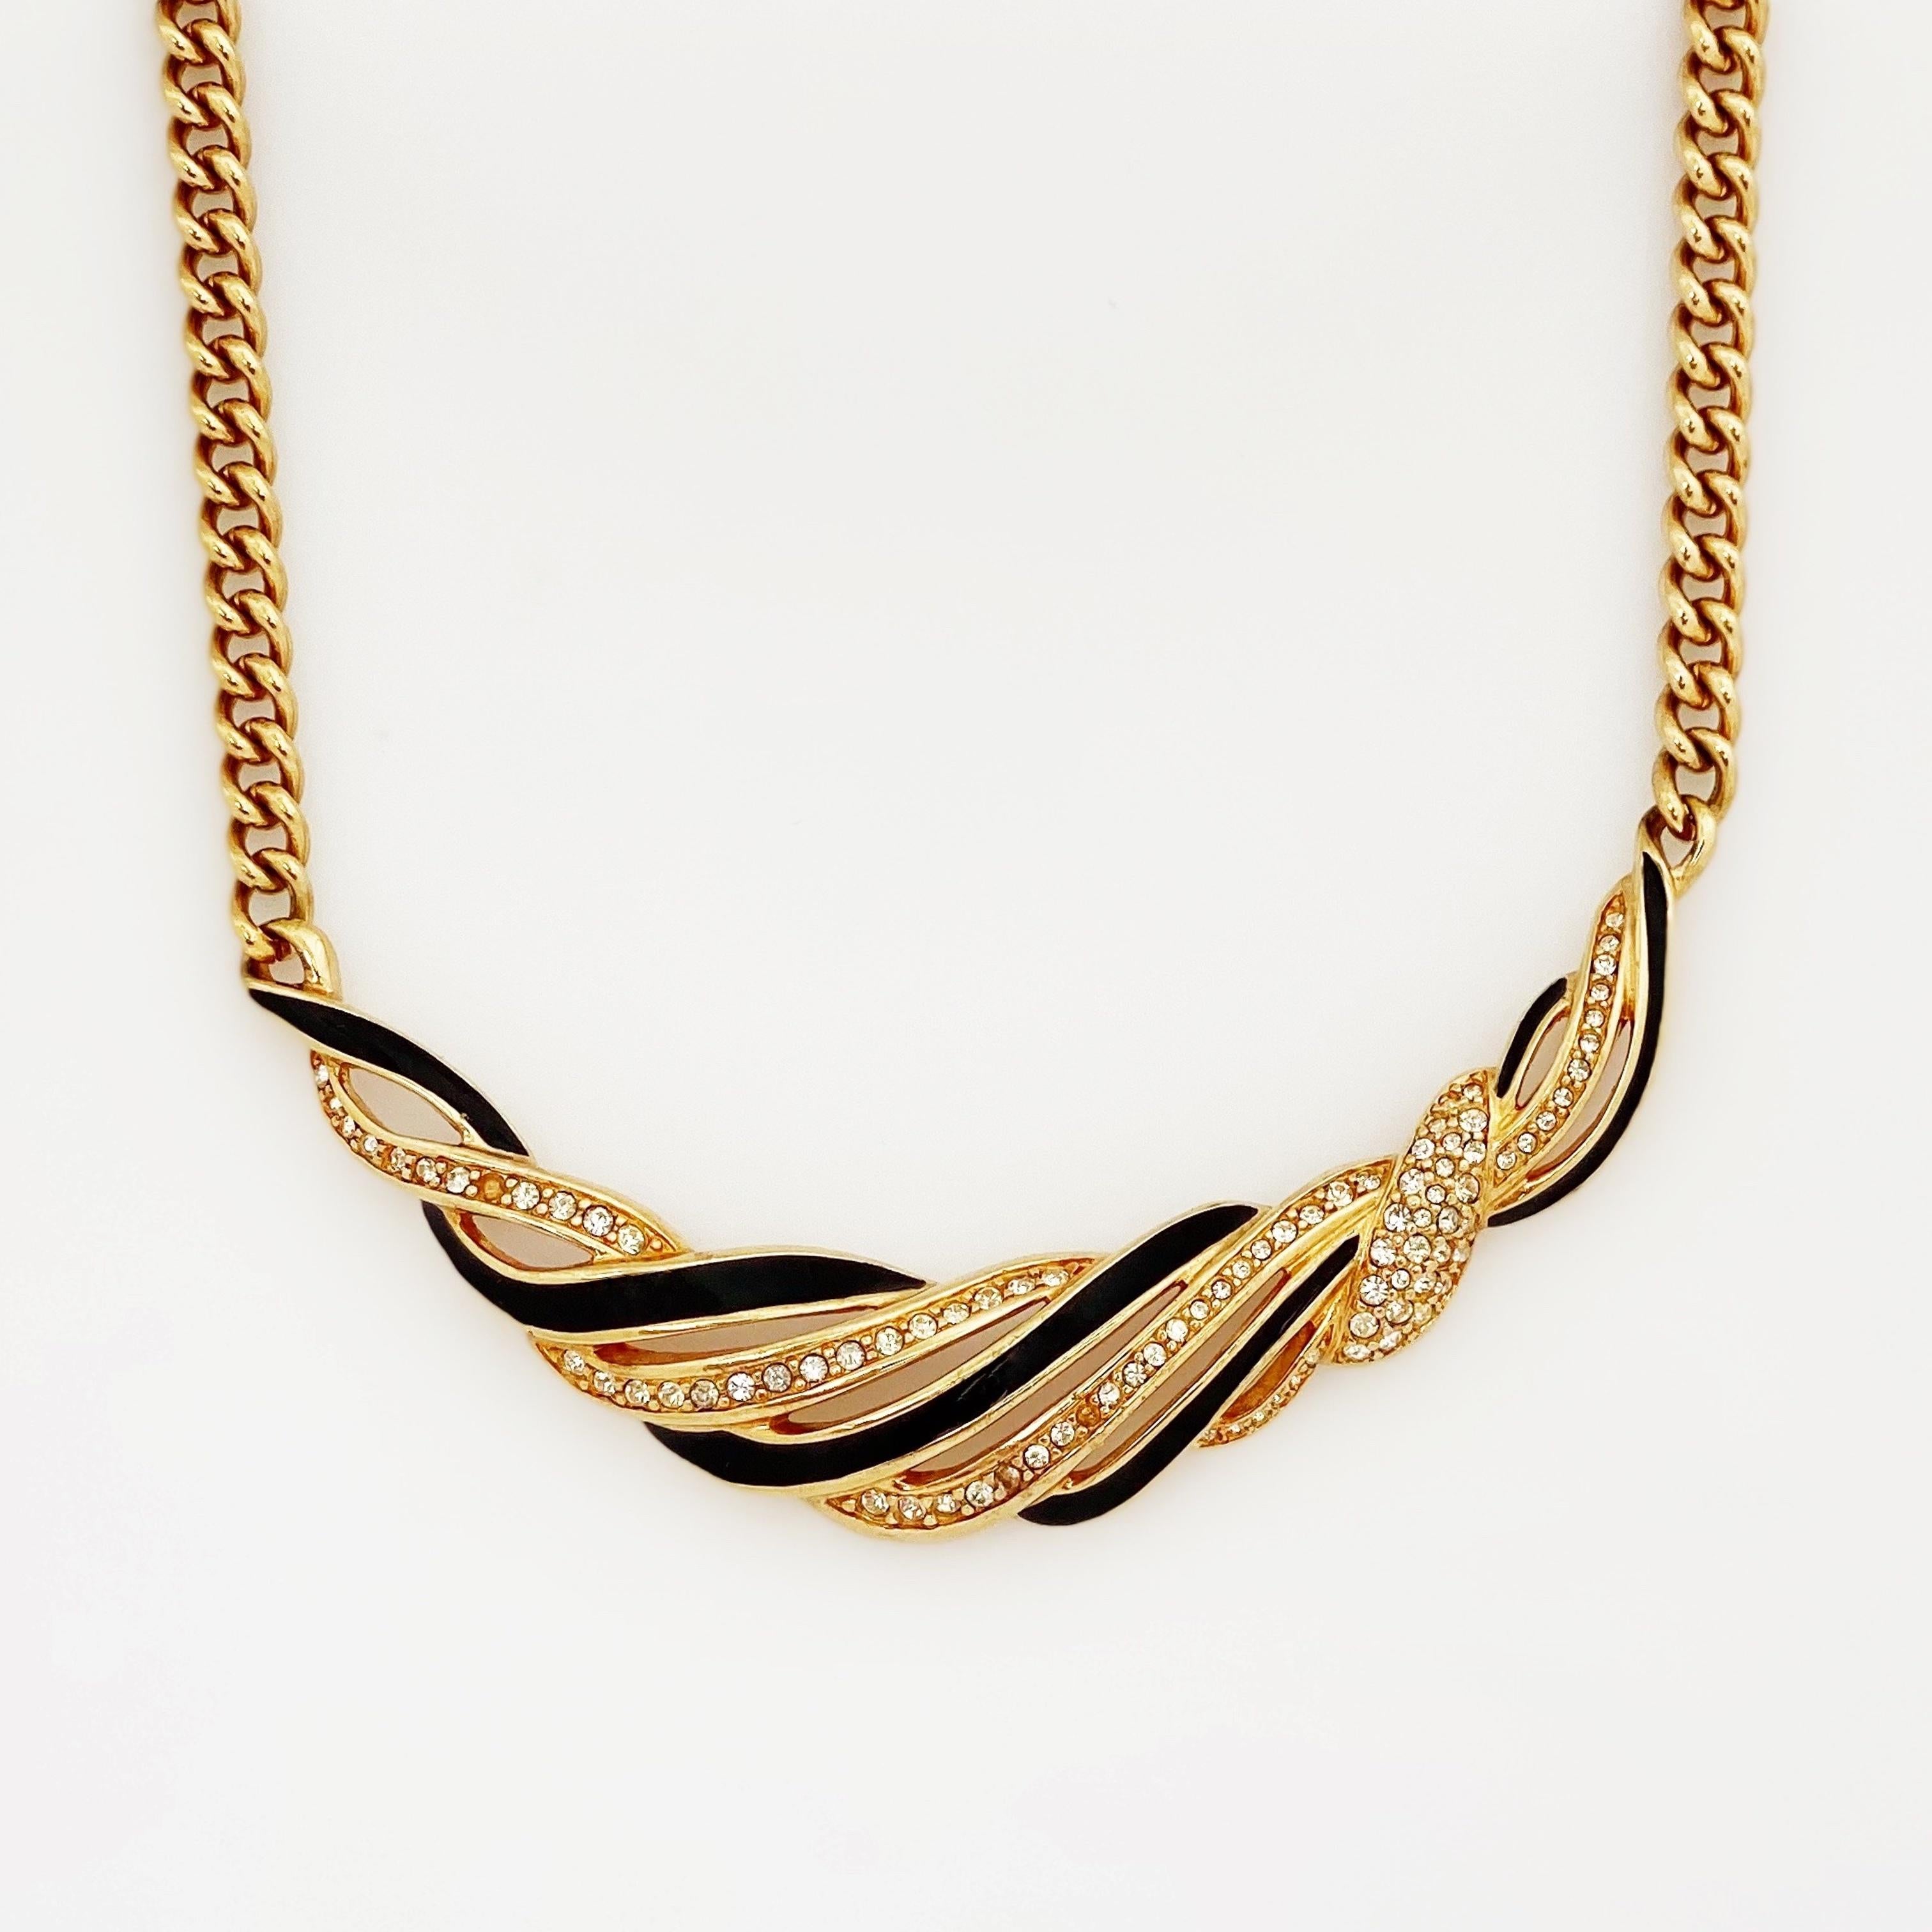 Modern Gilt & Black Enamel Bib Necklace by Swarovksi, 1980s For Sale